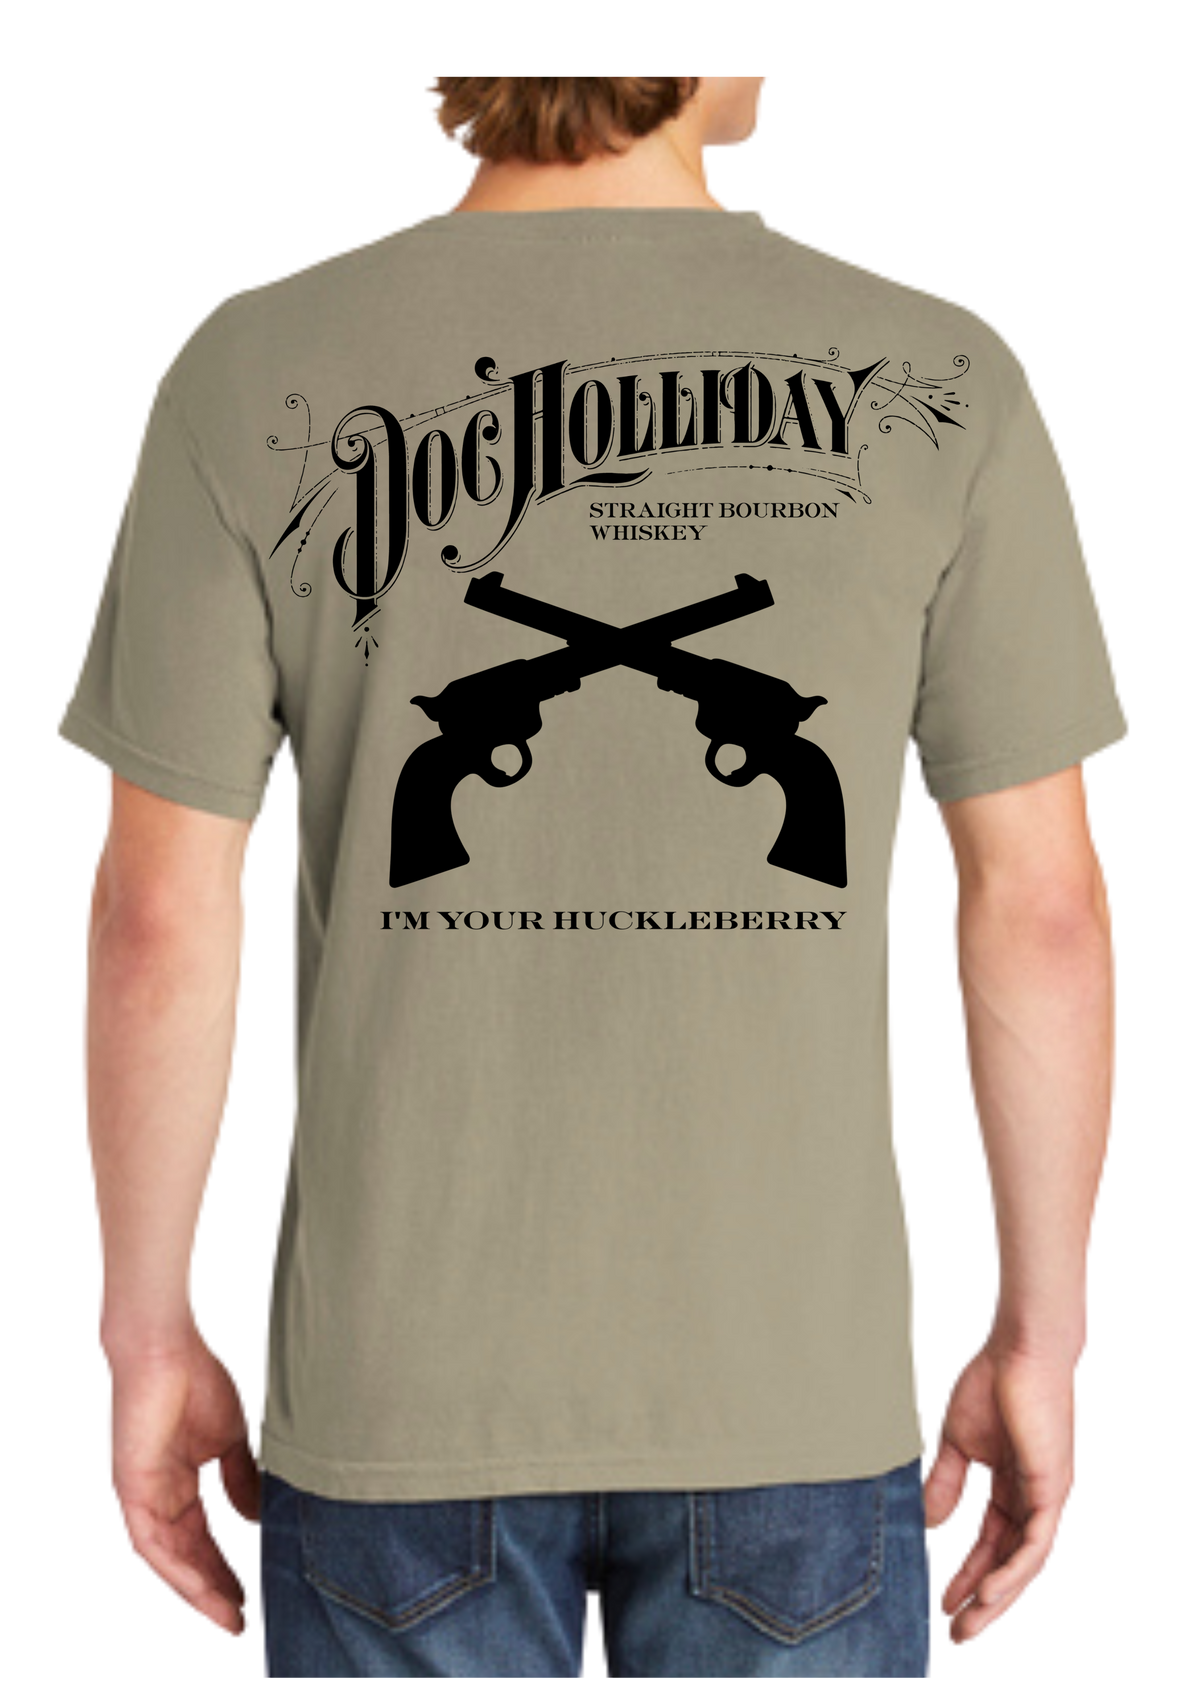 Doc Holliday T-shirts